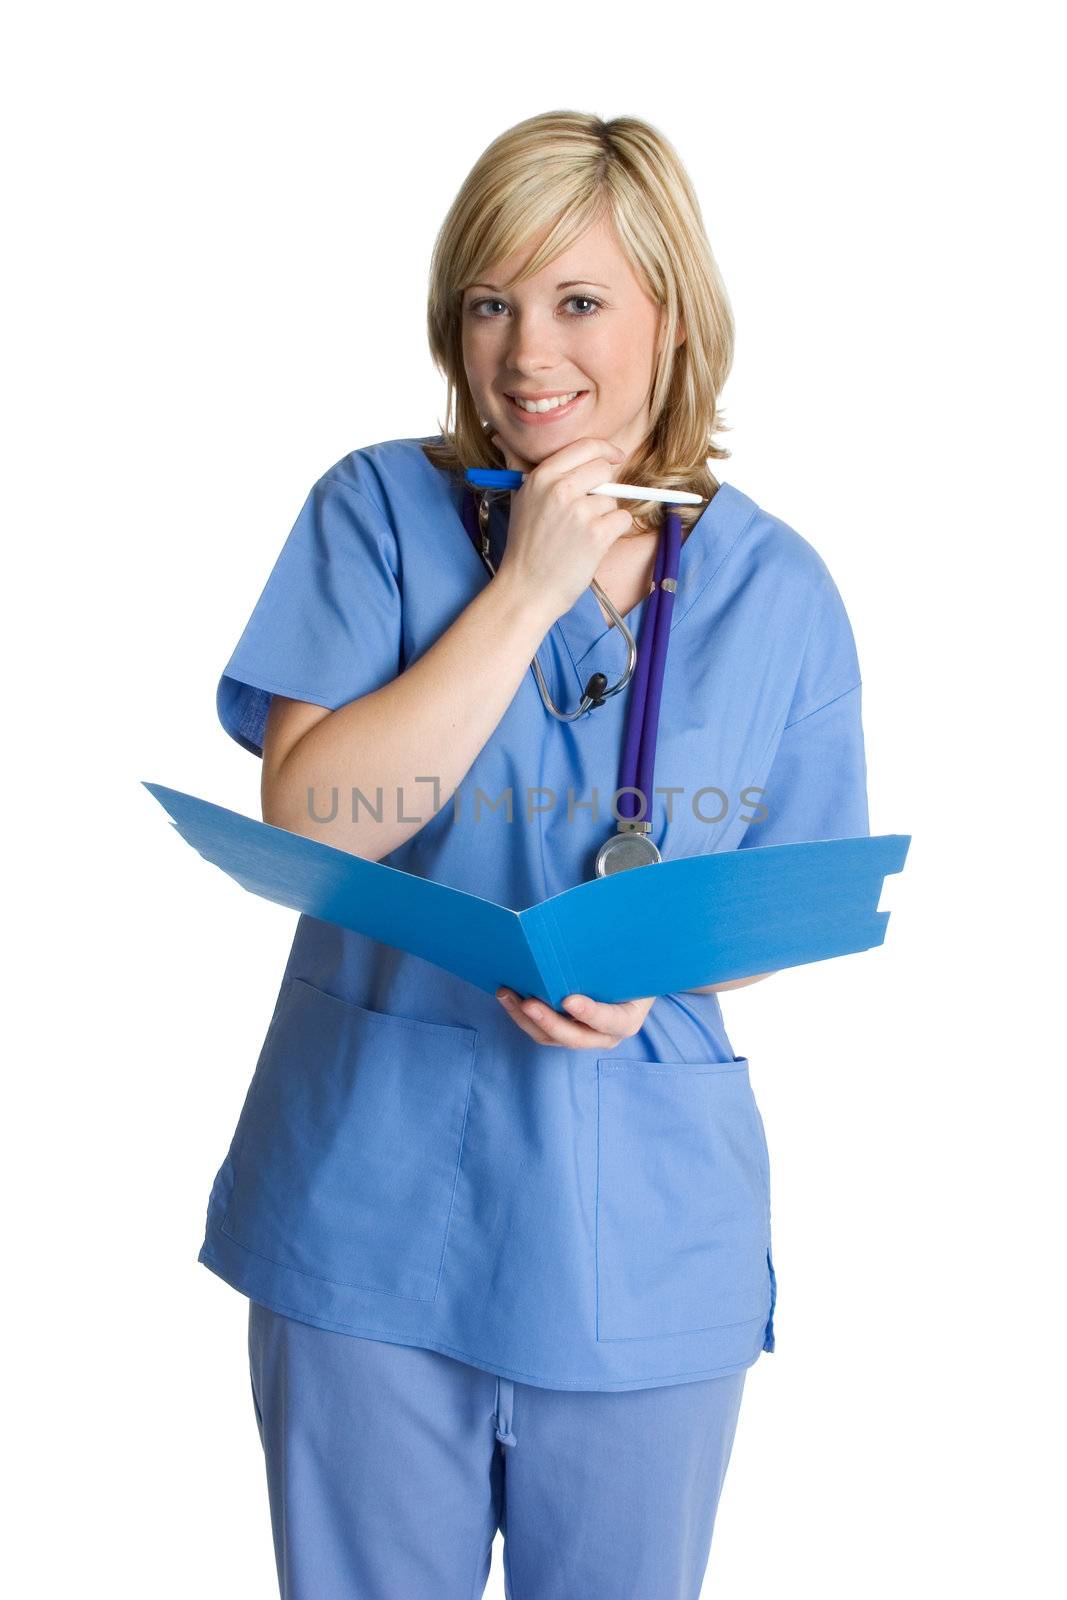 Nurse Holding Folder by keeweeboy